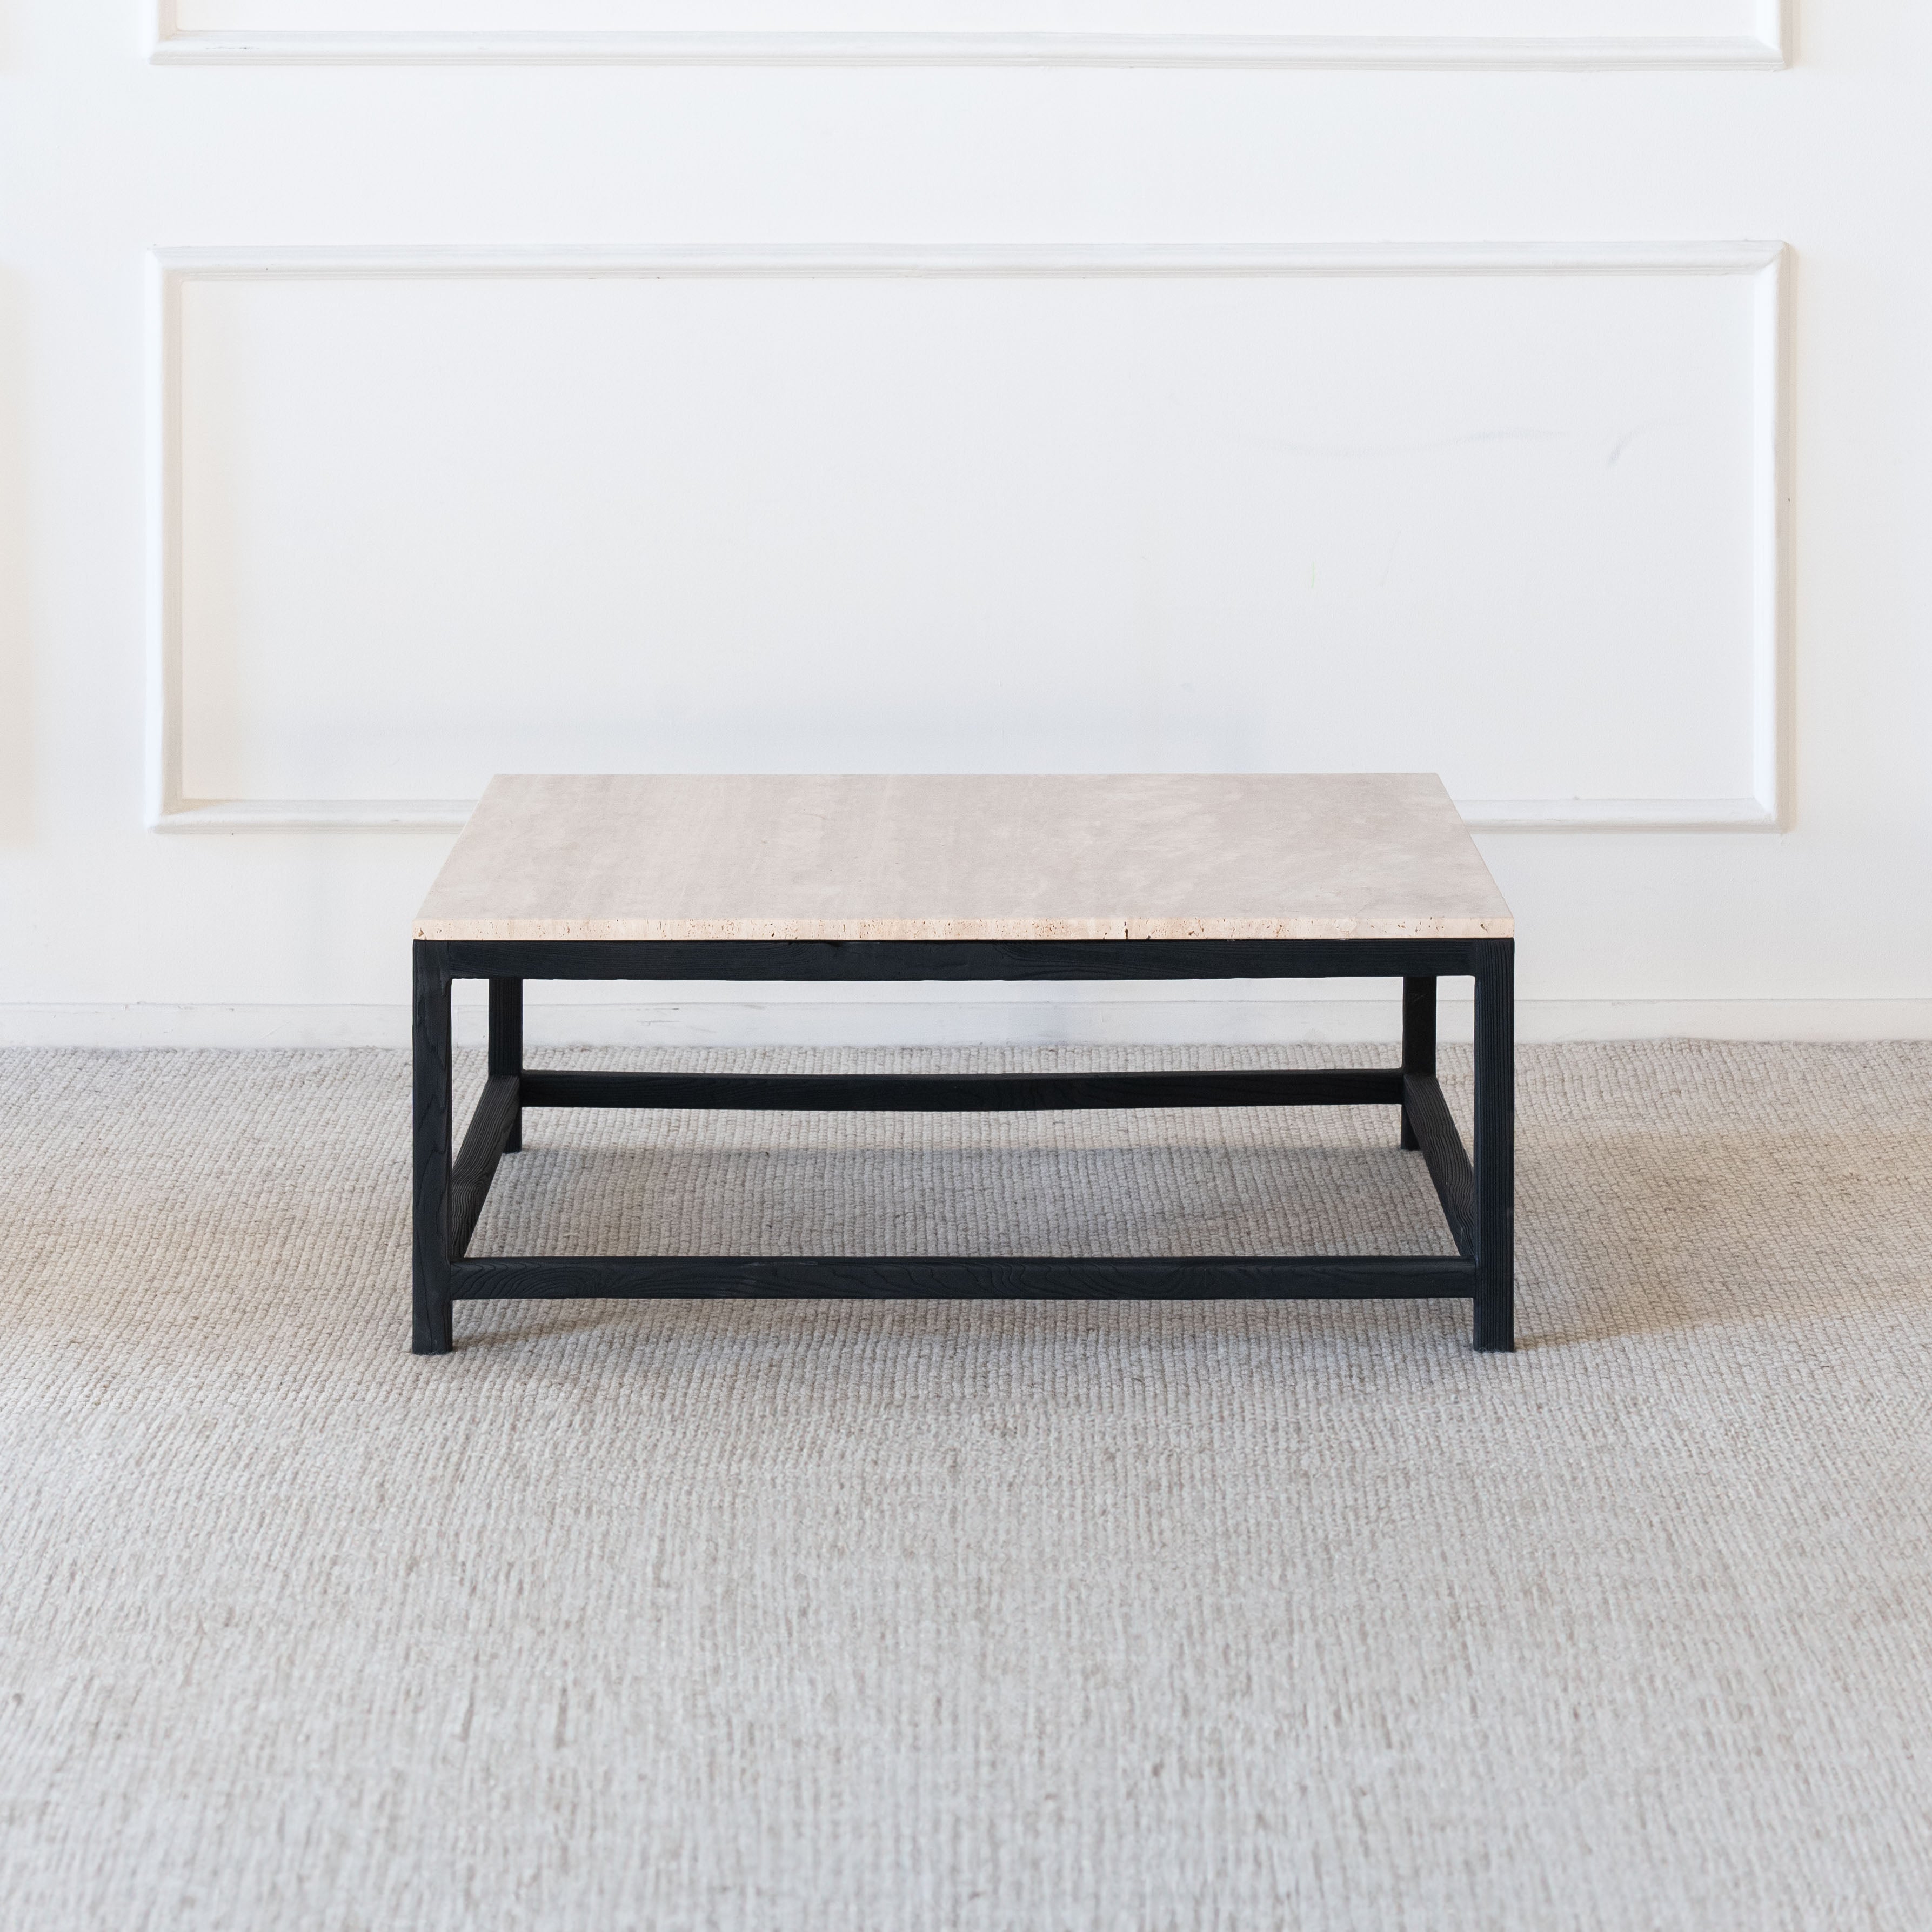 Cordoba Coffee Table Black Legs - Travertine Marble Top - Wood and Steel Furnitures